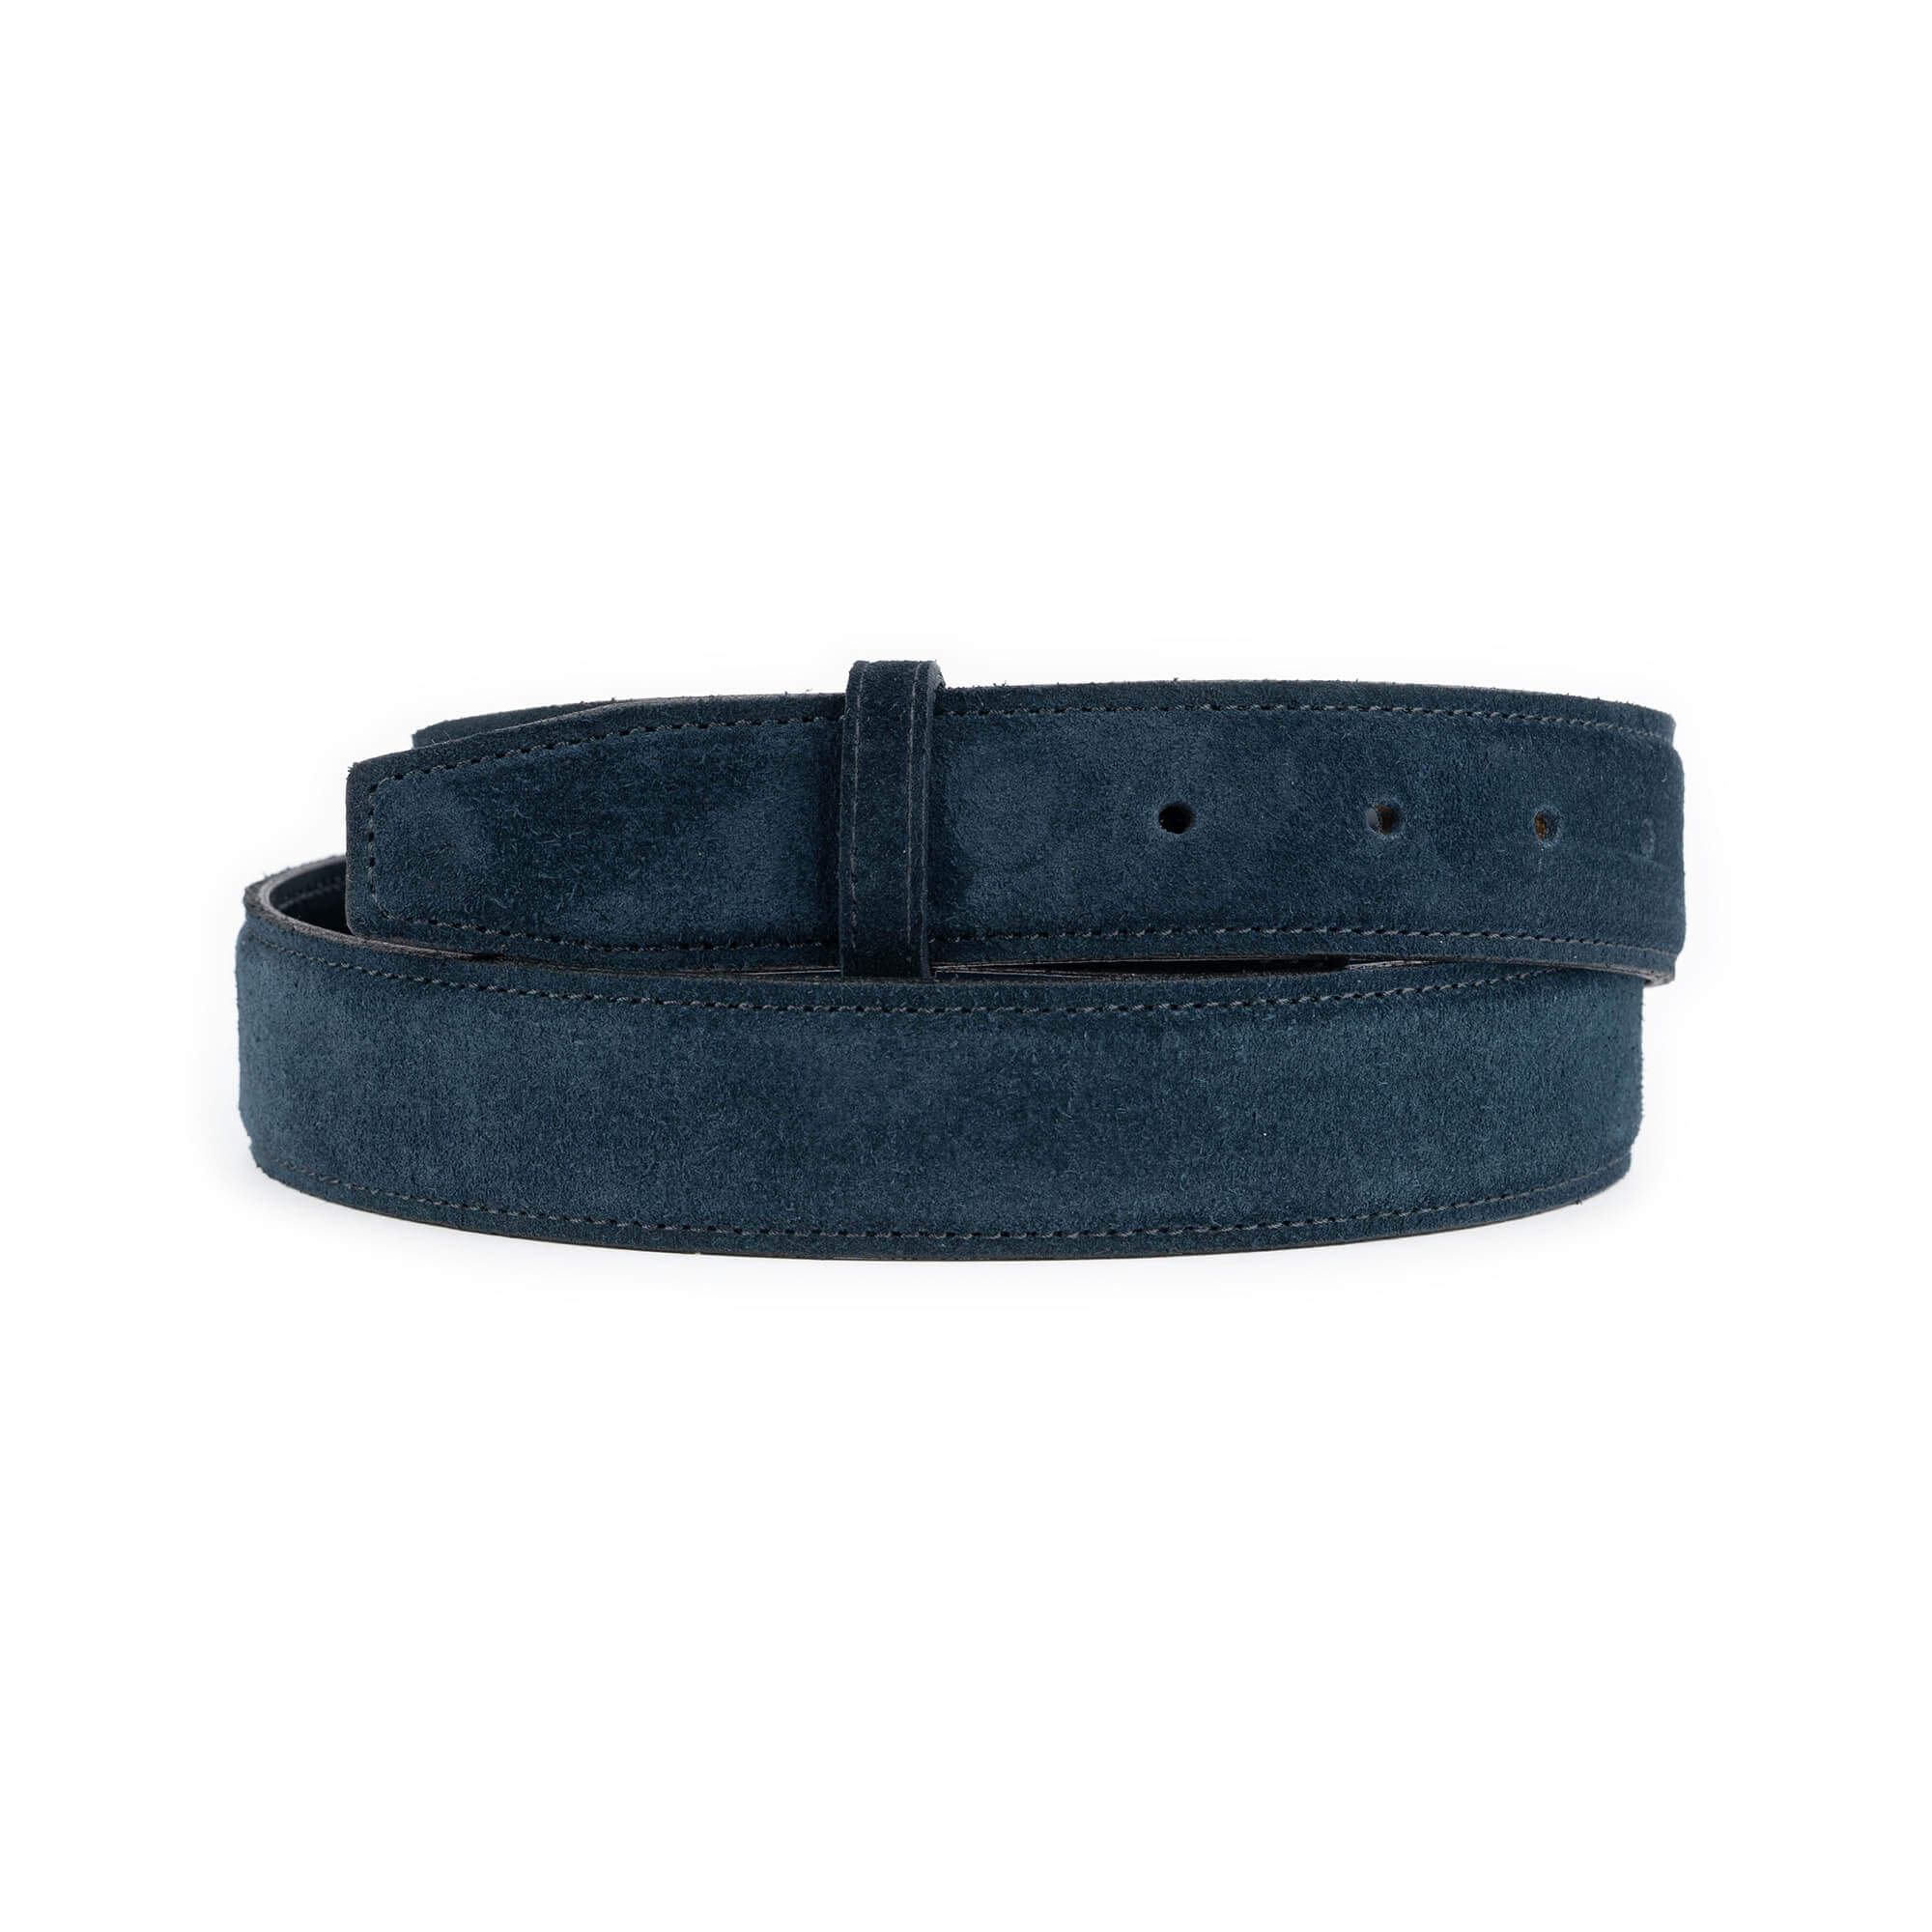 Buy Dark Blue Patent Leather Belt Reversible | Capo Pelle